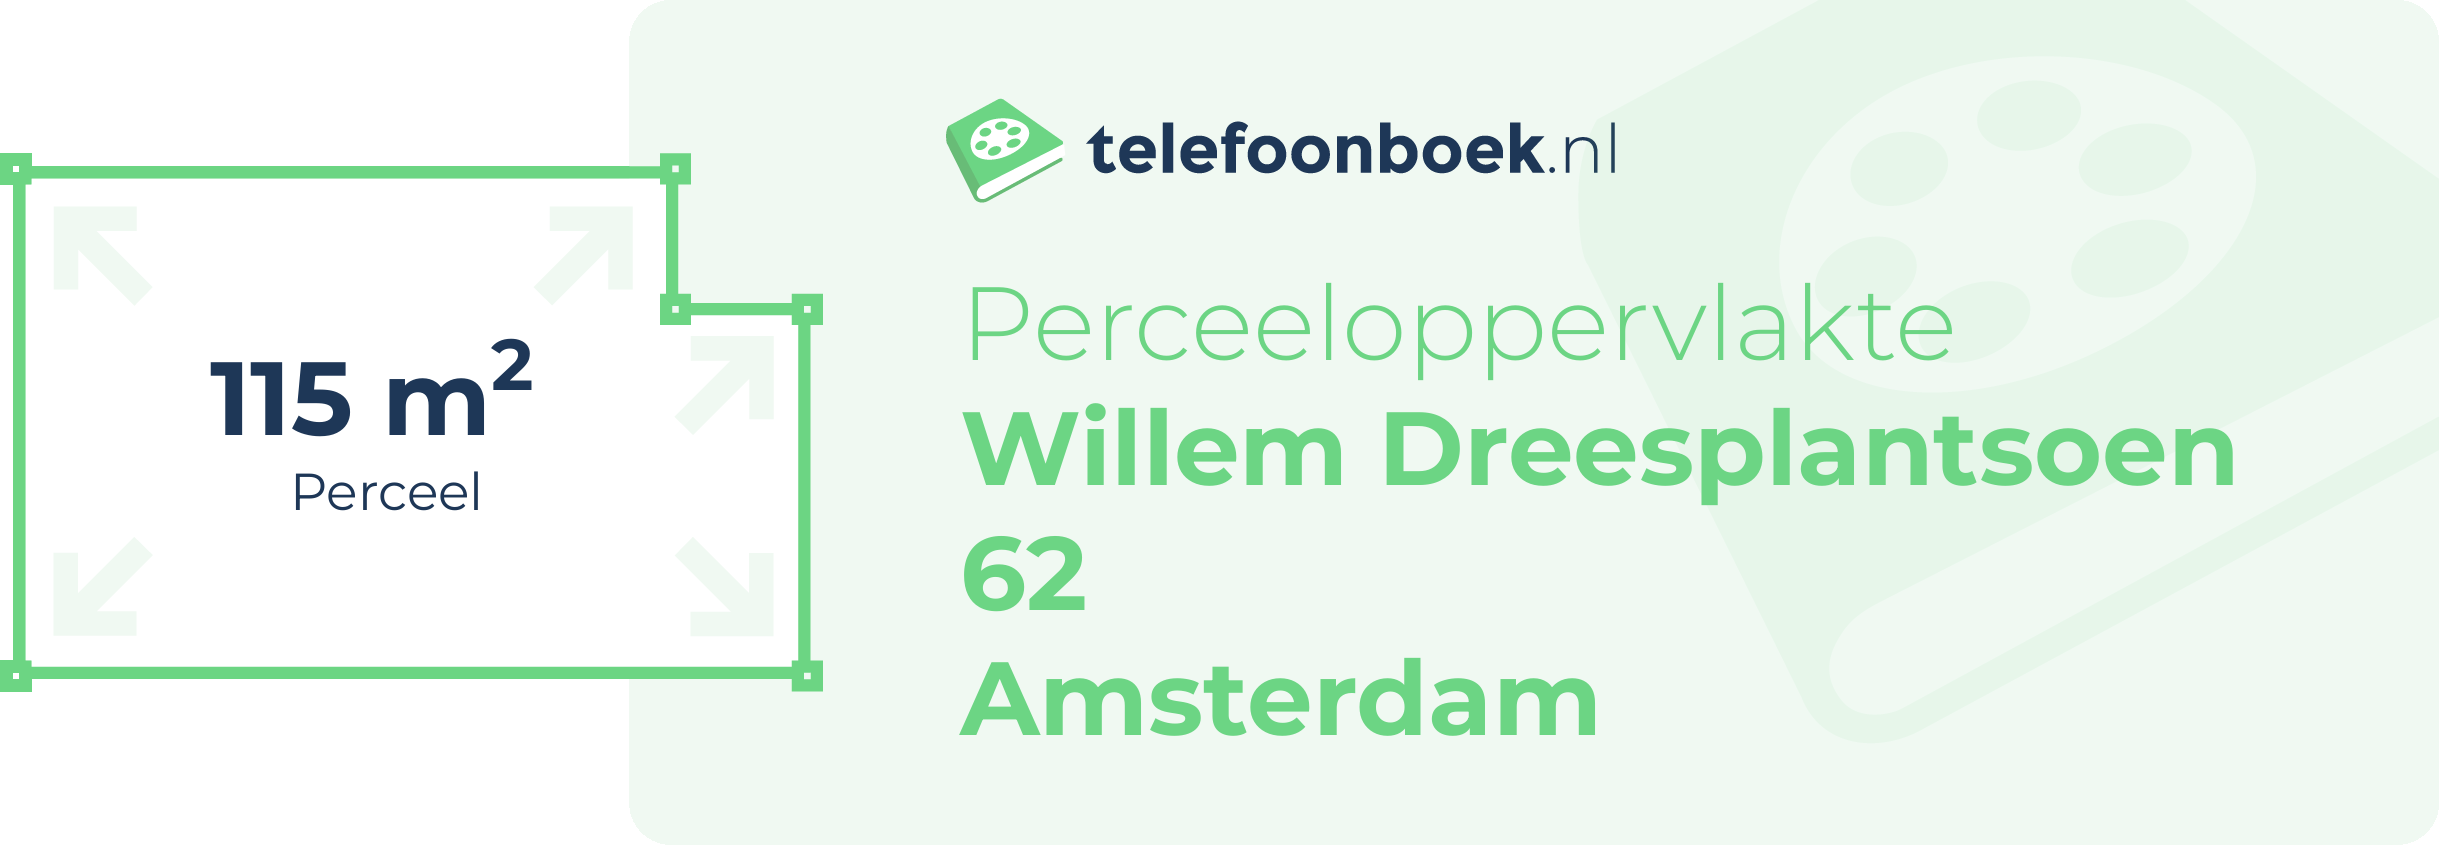 Perceeloppervlakte Willem Dreesplantsoen 62 Amsterdam